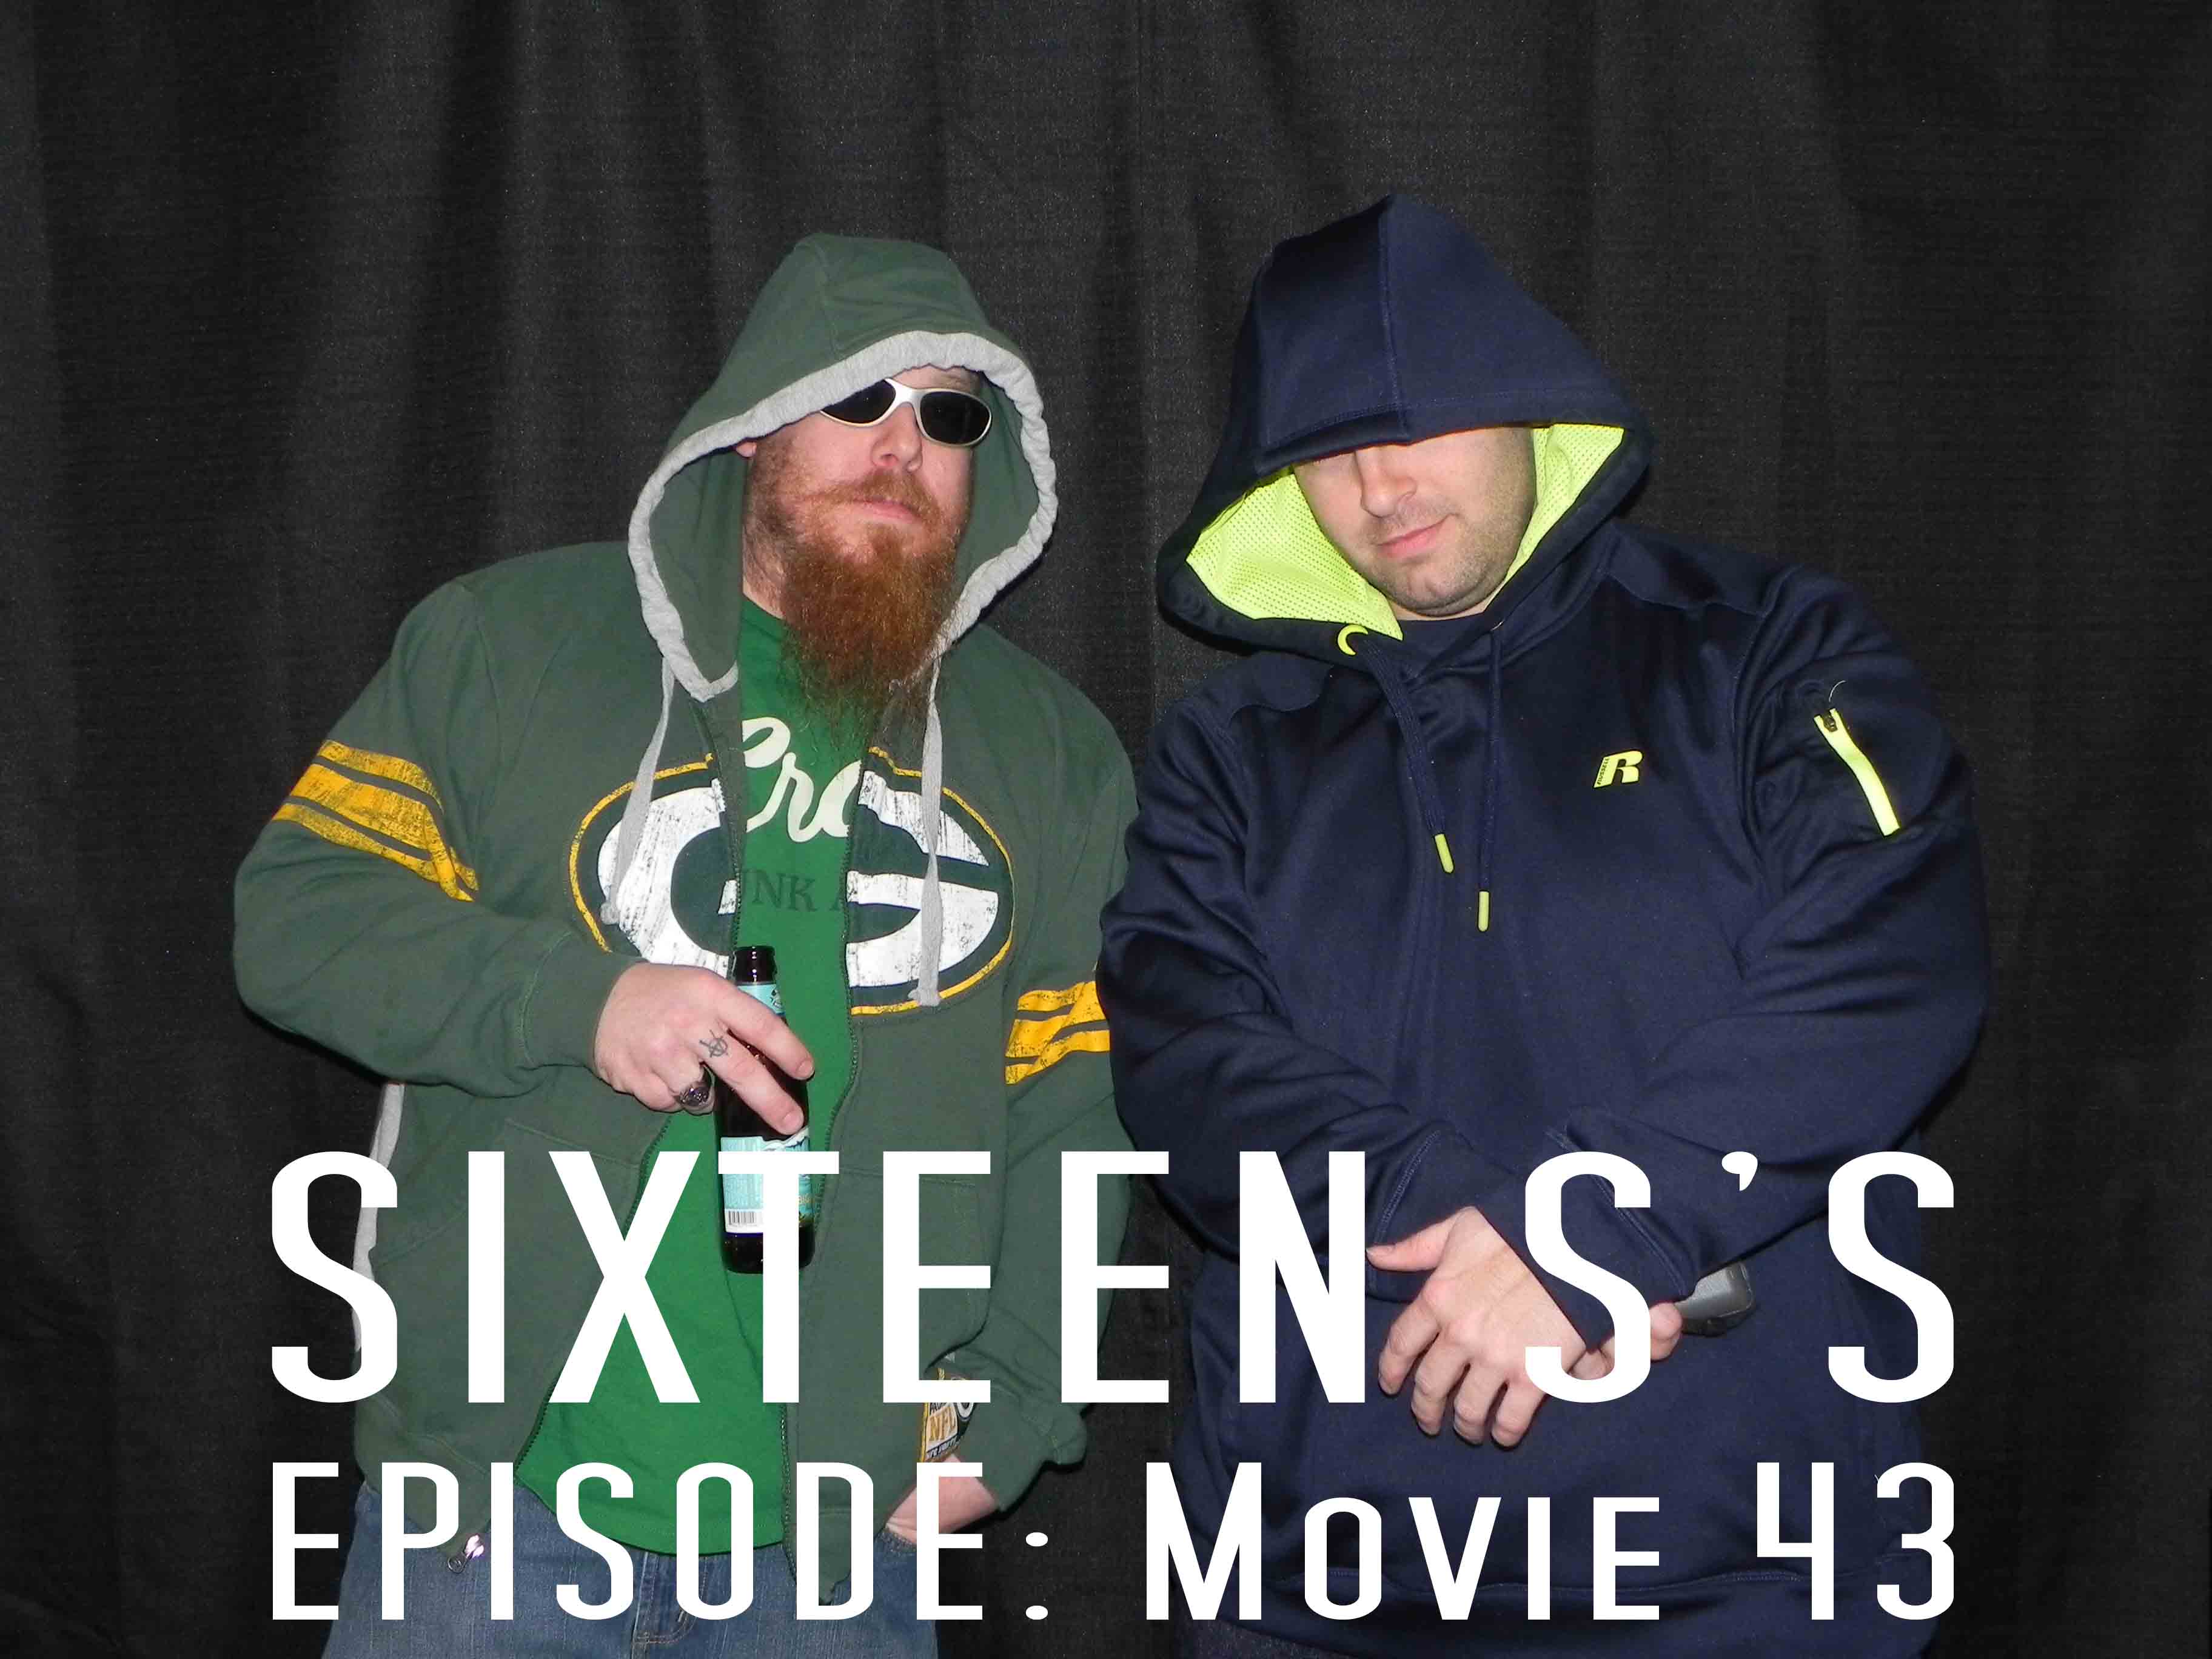 Sixteen S’s (Episode Movie 43)